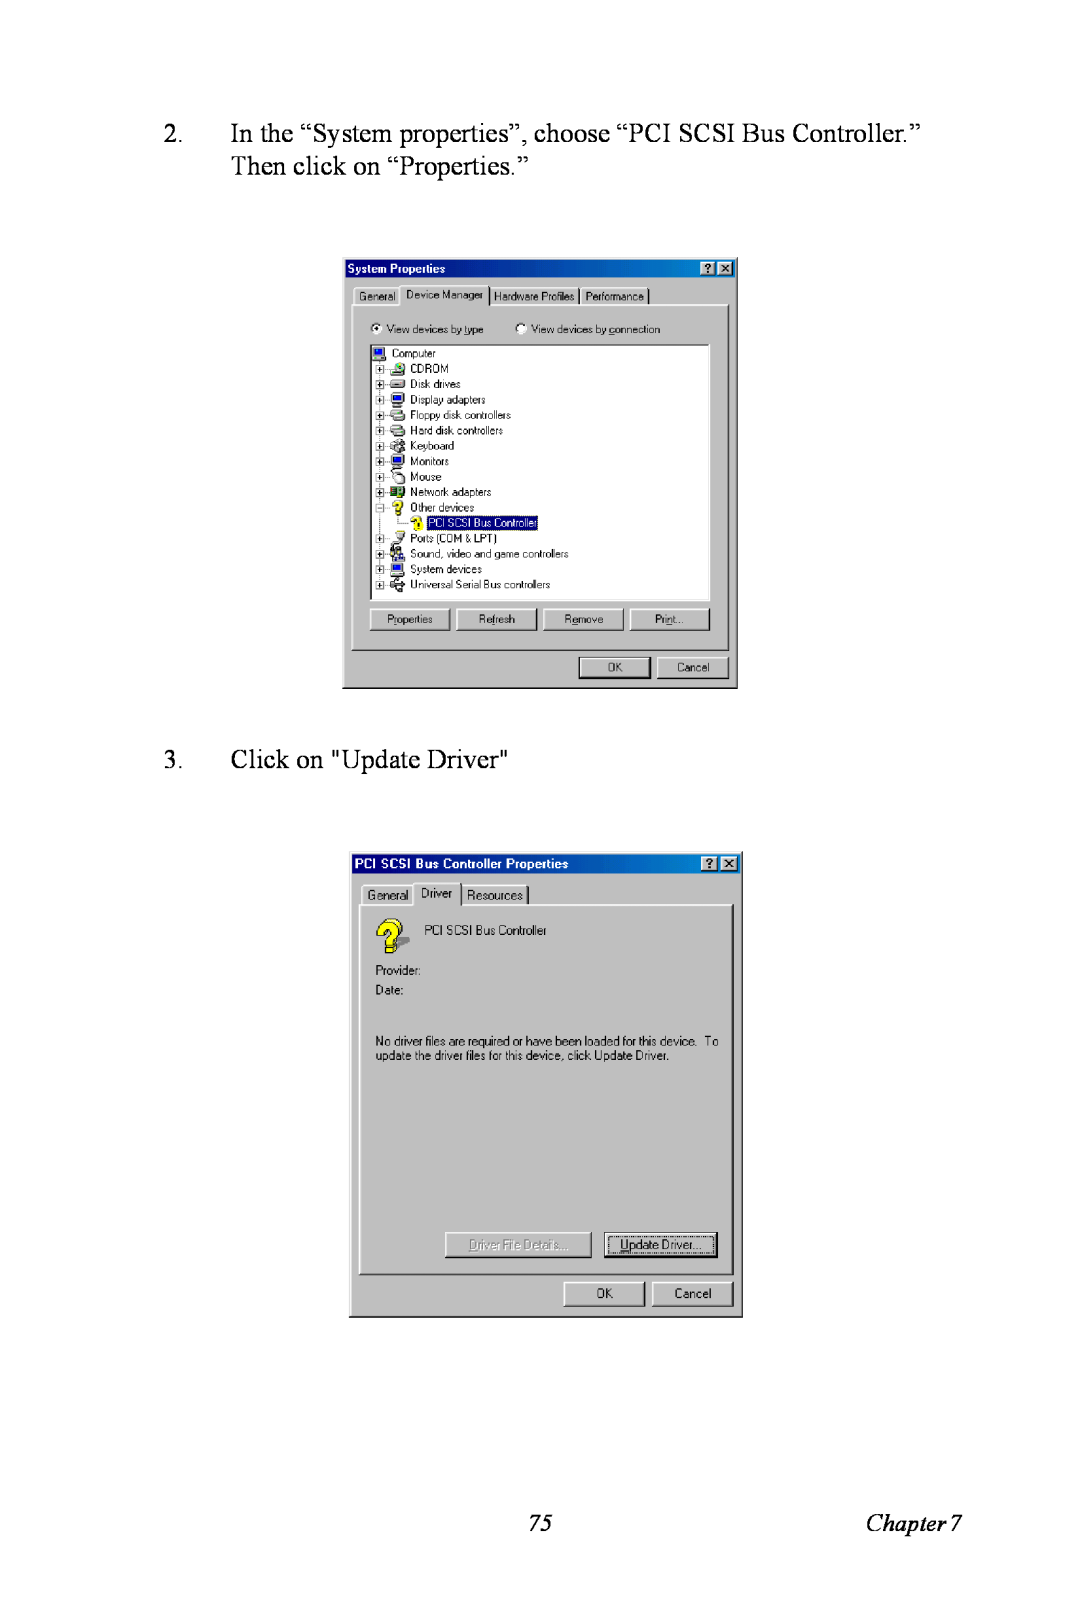 Advantech PCA-6187 user manual Click on Update Driver 